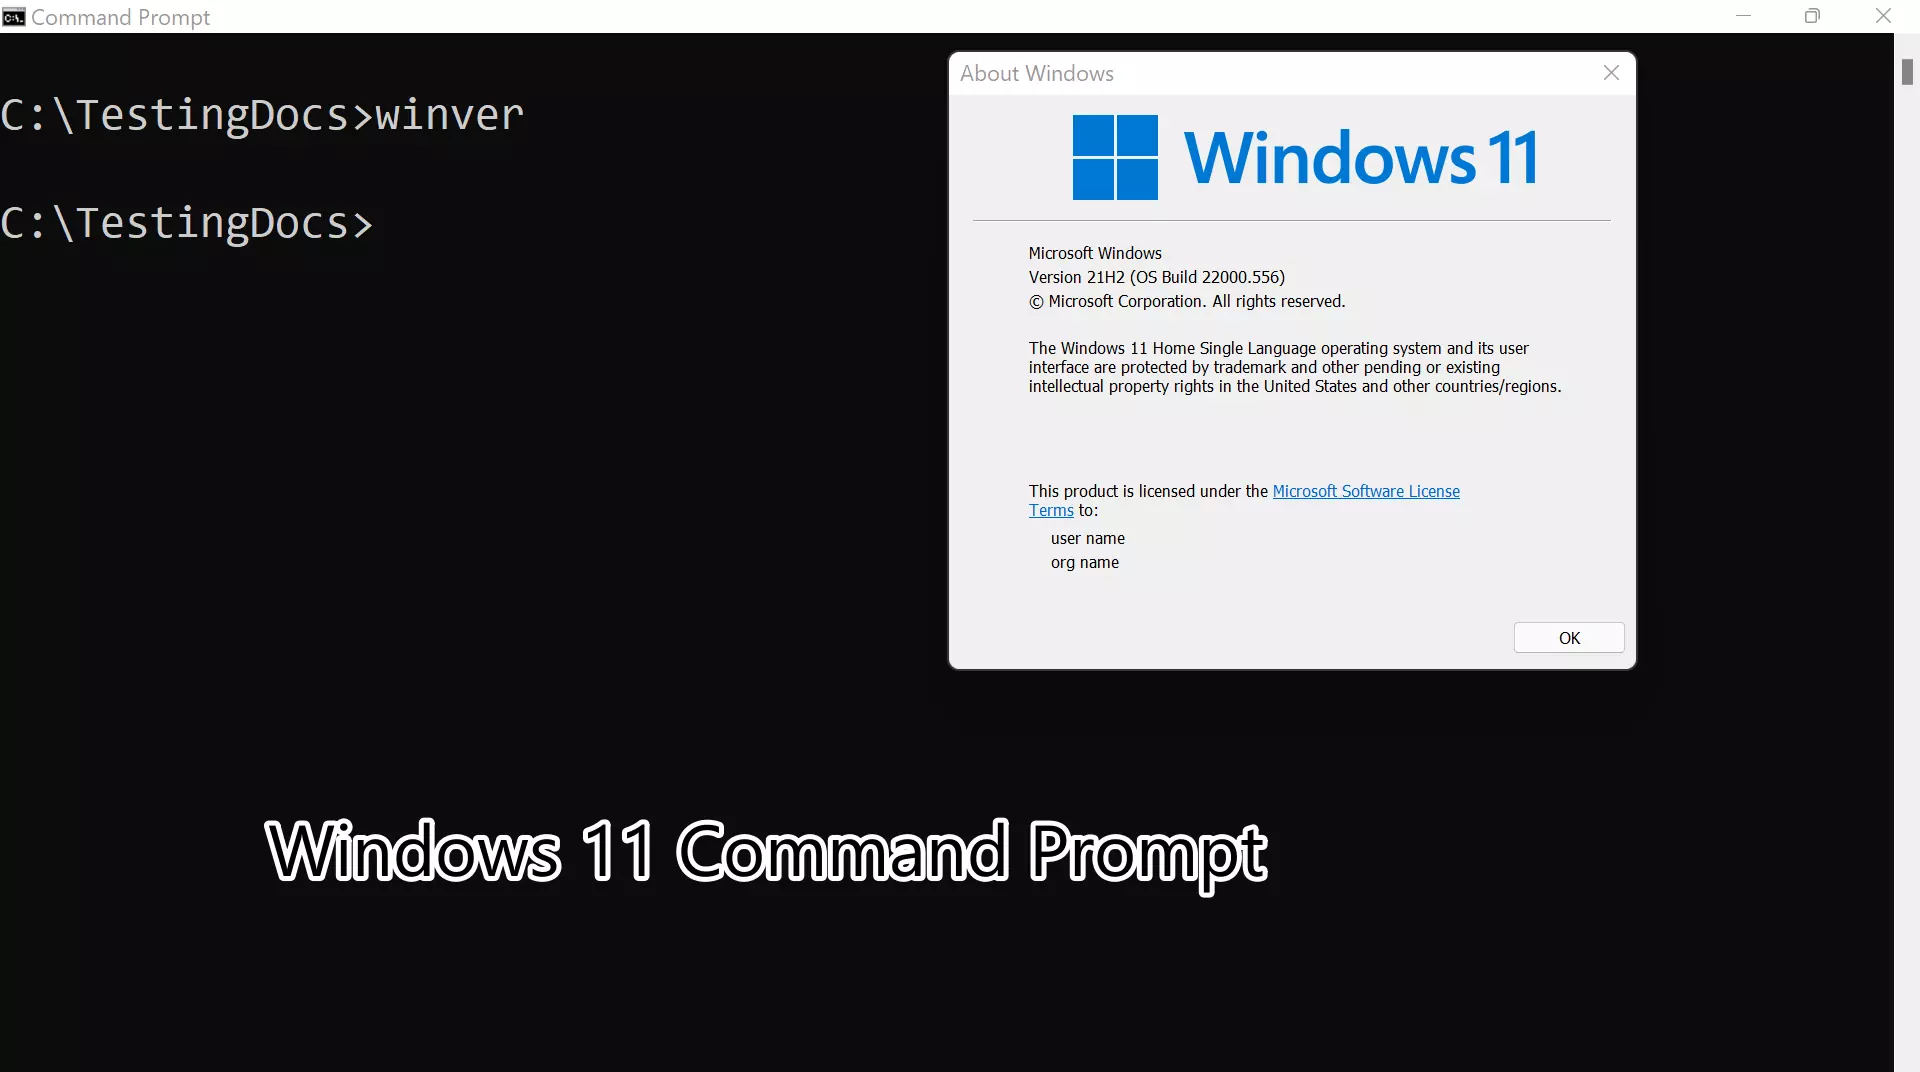 Windows 11 Command Prompt Window